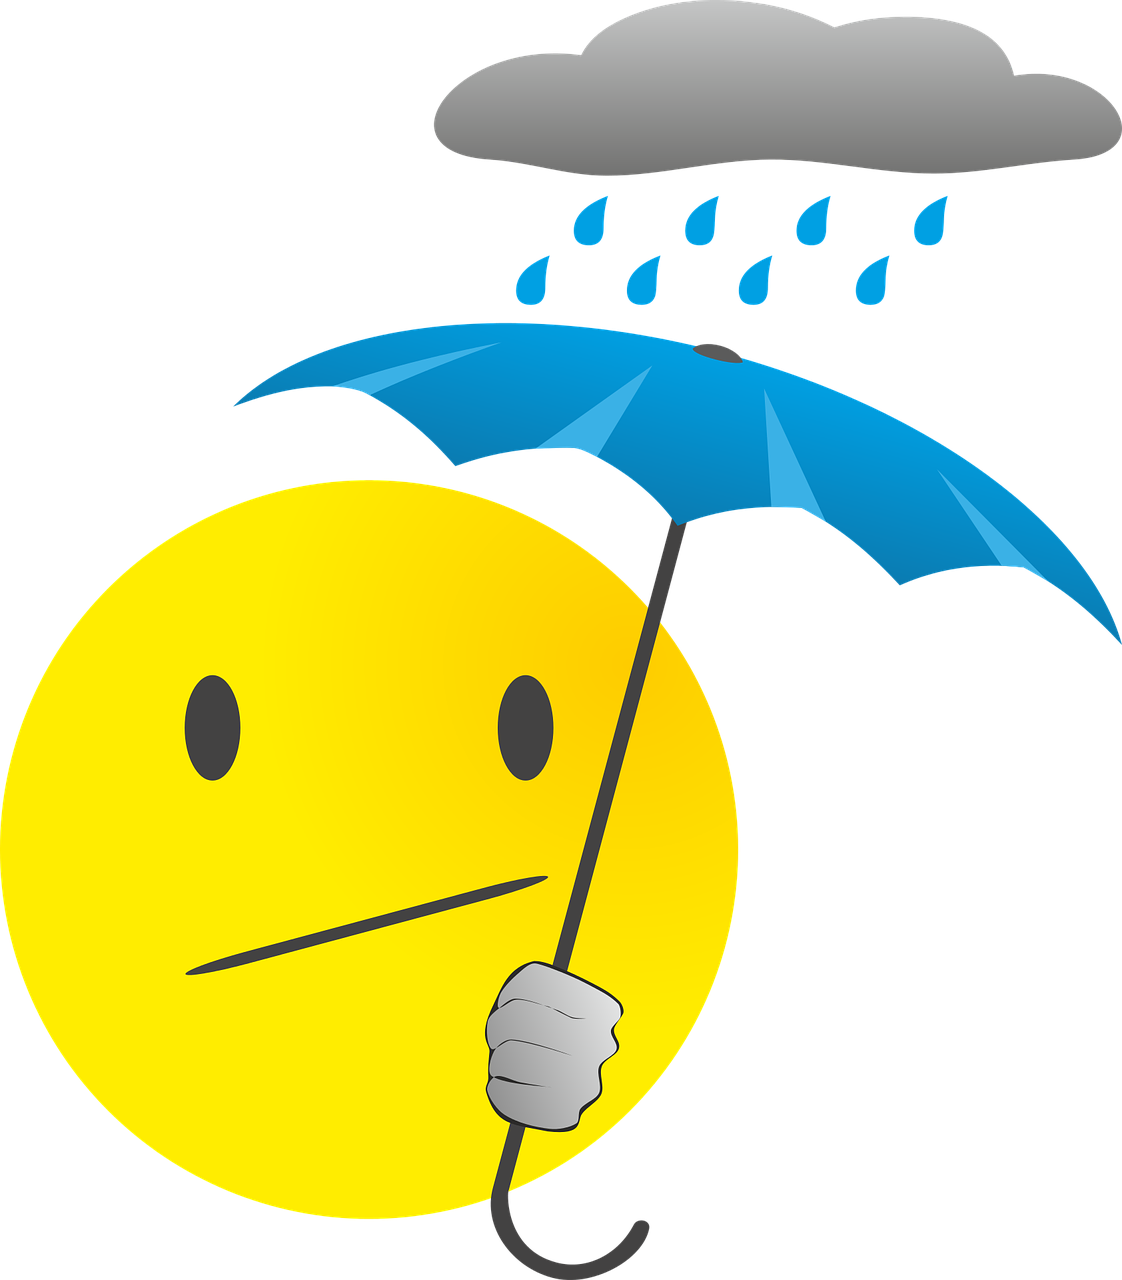 emoji make it rain